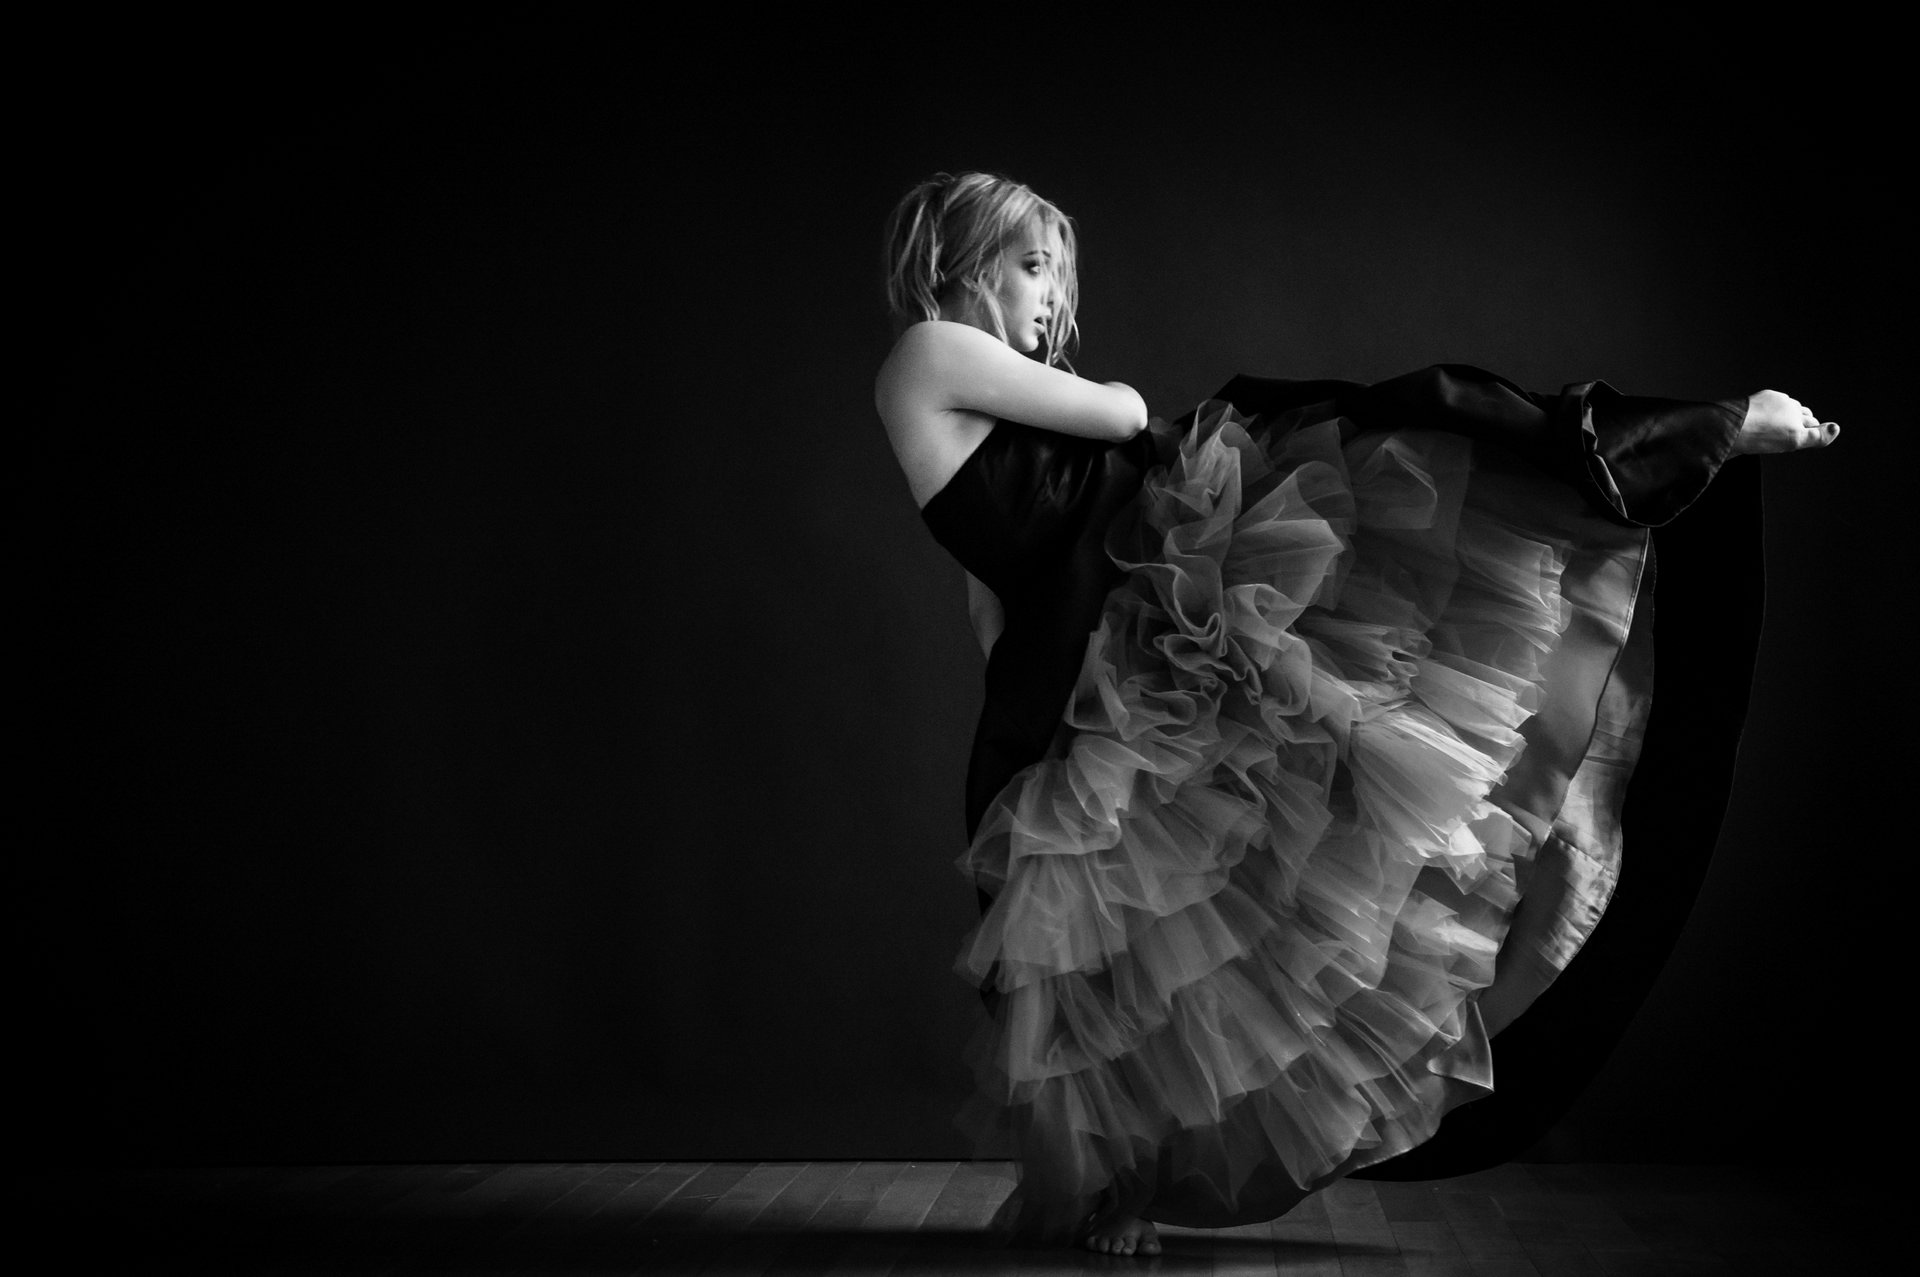 nEO_IMG_Xing Photography Soul of Dance - Haley-104-BW.jpg